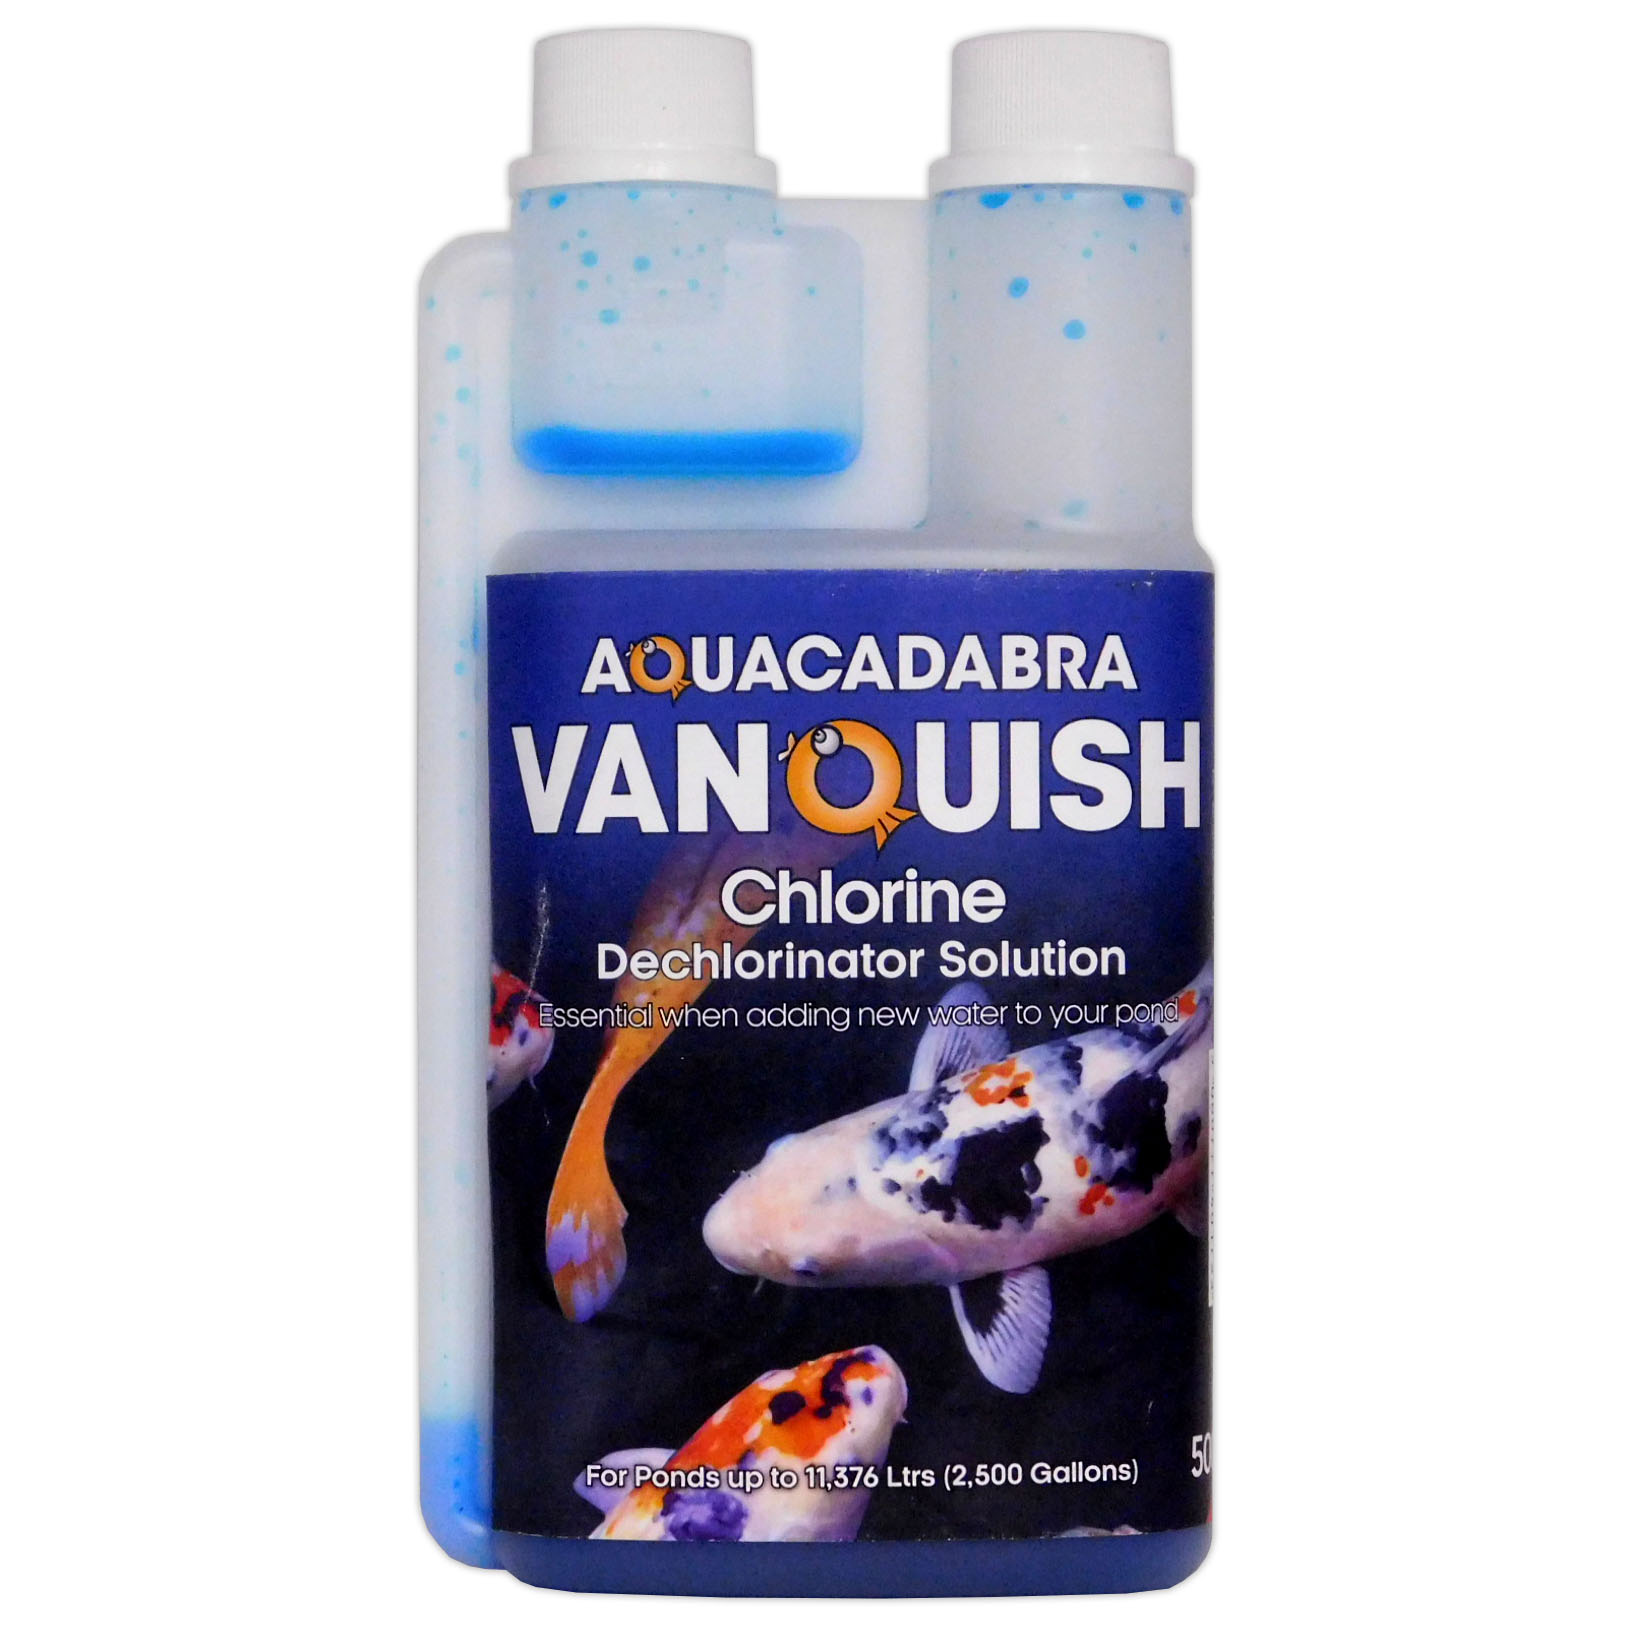 vanquish pond dechlorinator chlorine tap safe water solution fish aquacadabra image 1